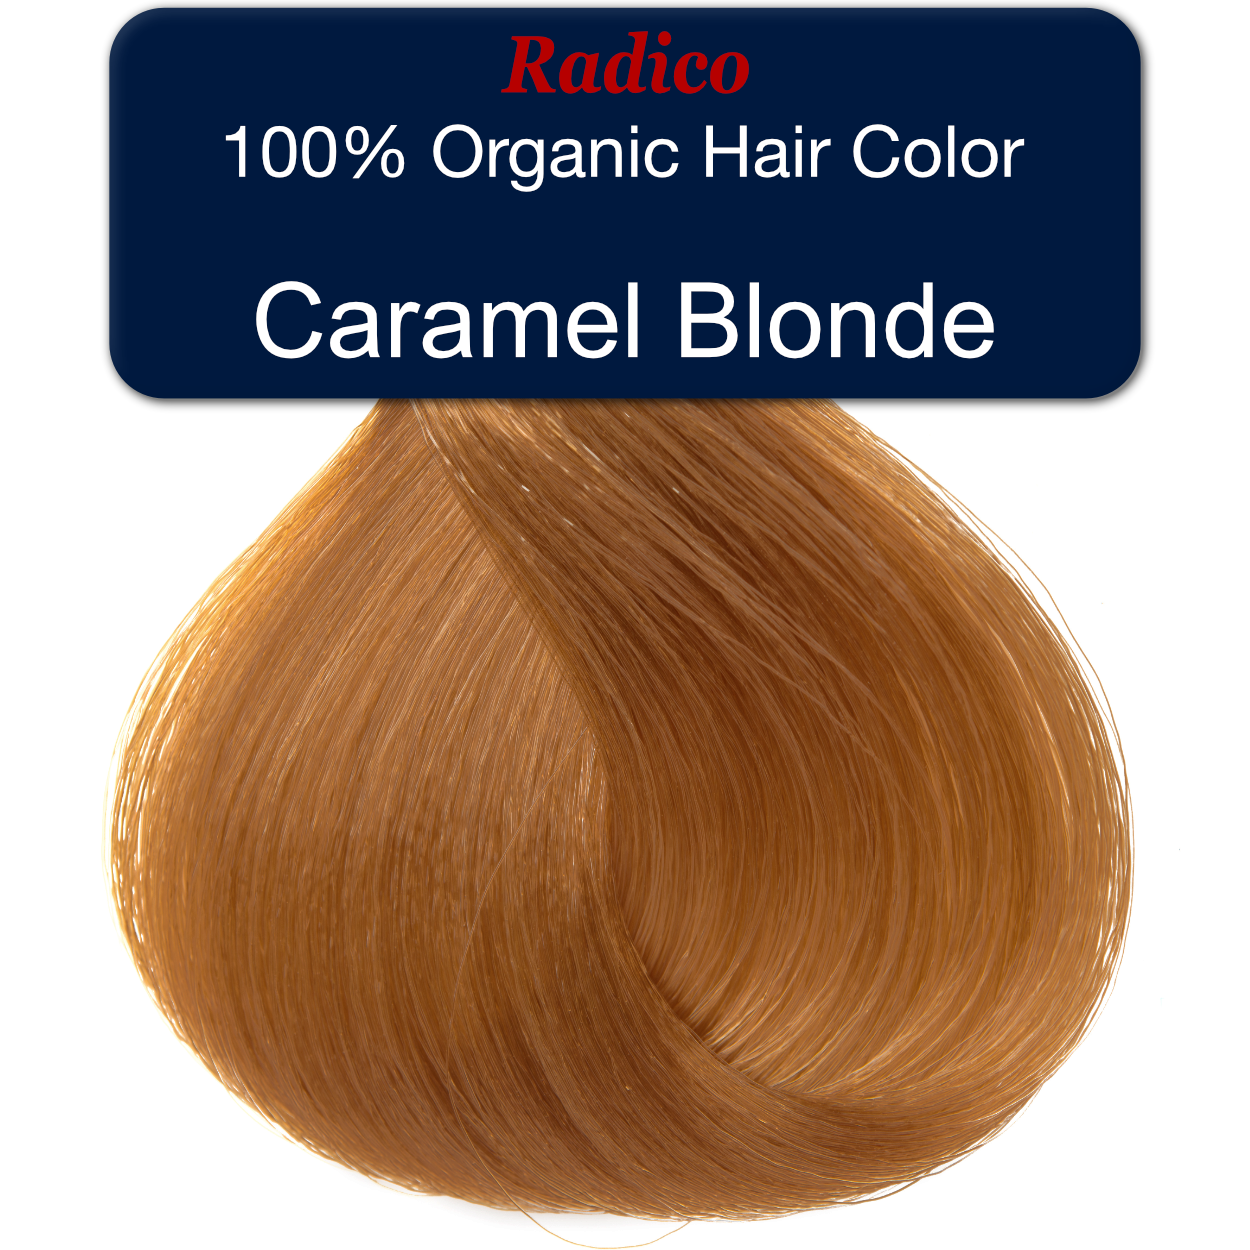 caramel brown hair dye box